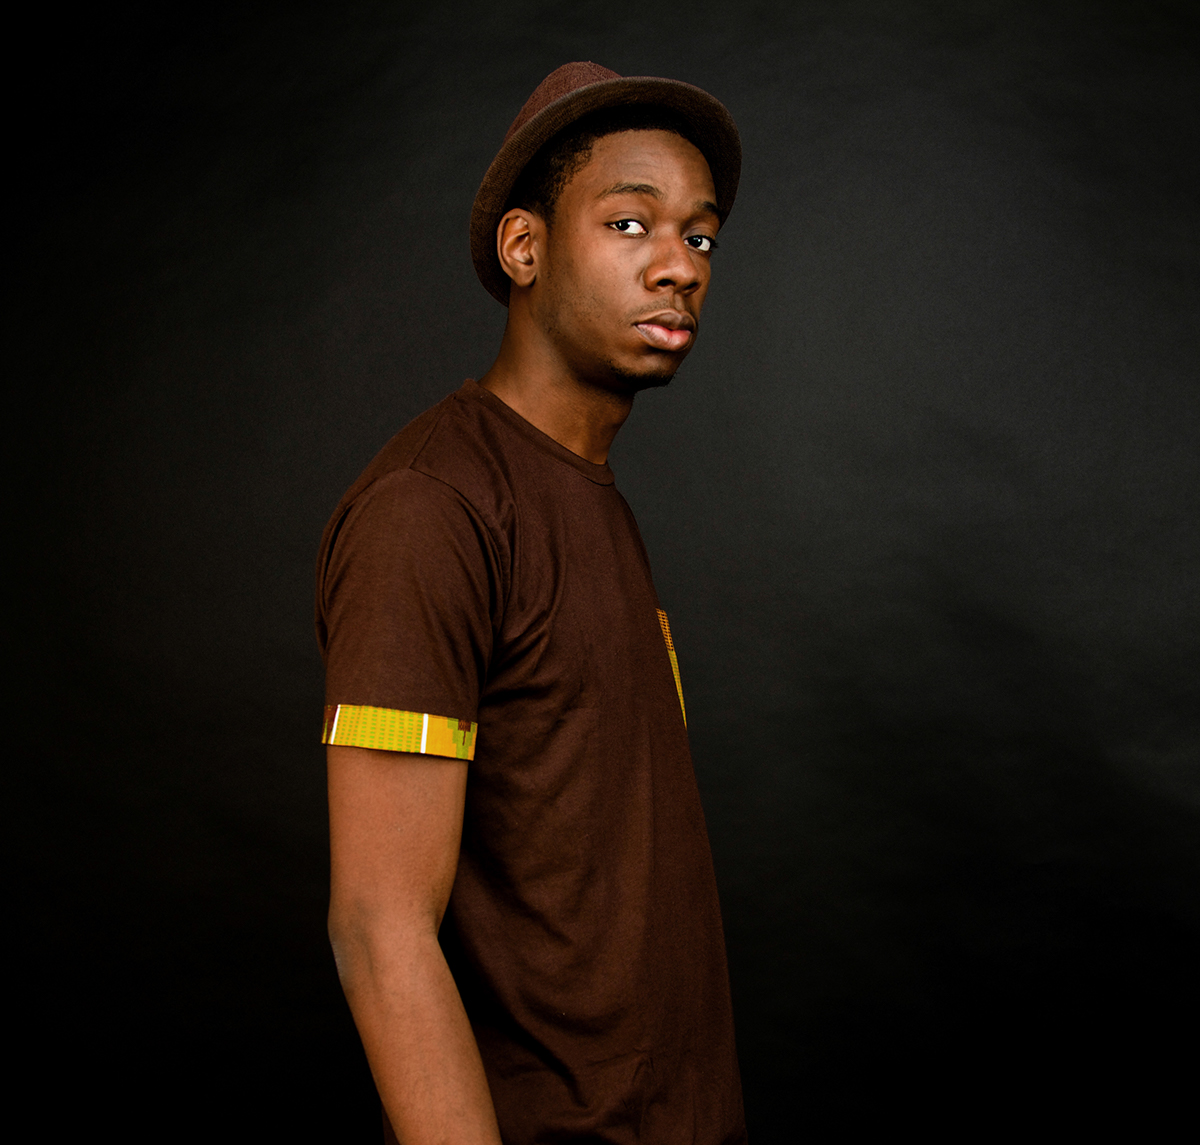 Adobe Portfolio artist musician classik luvanga studio photoshoot